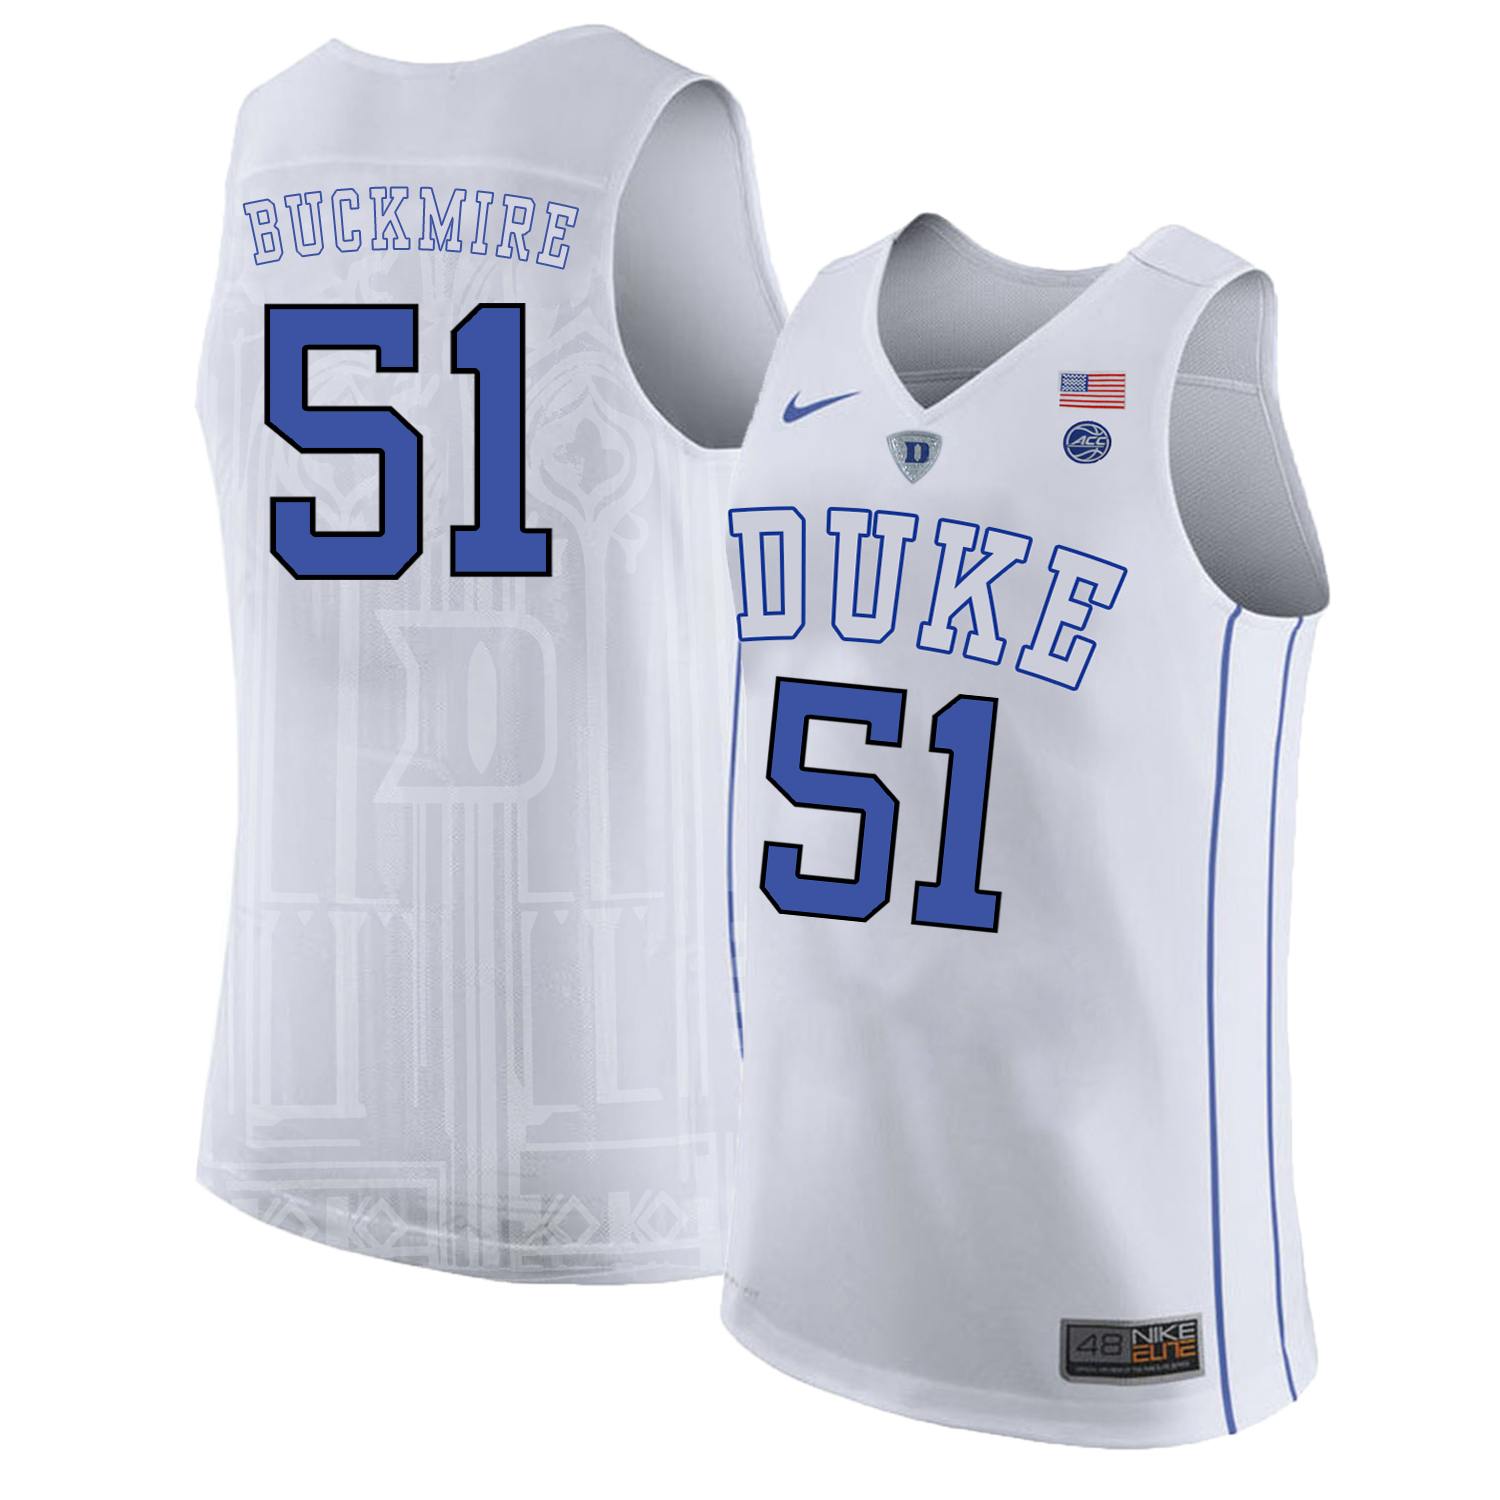 Duke Blue Devils 51 Mike Buckmire White Nike College Basketball Jersey